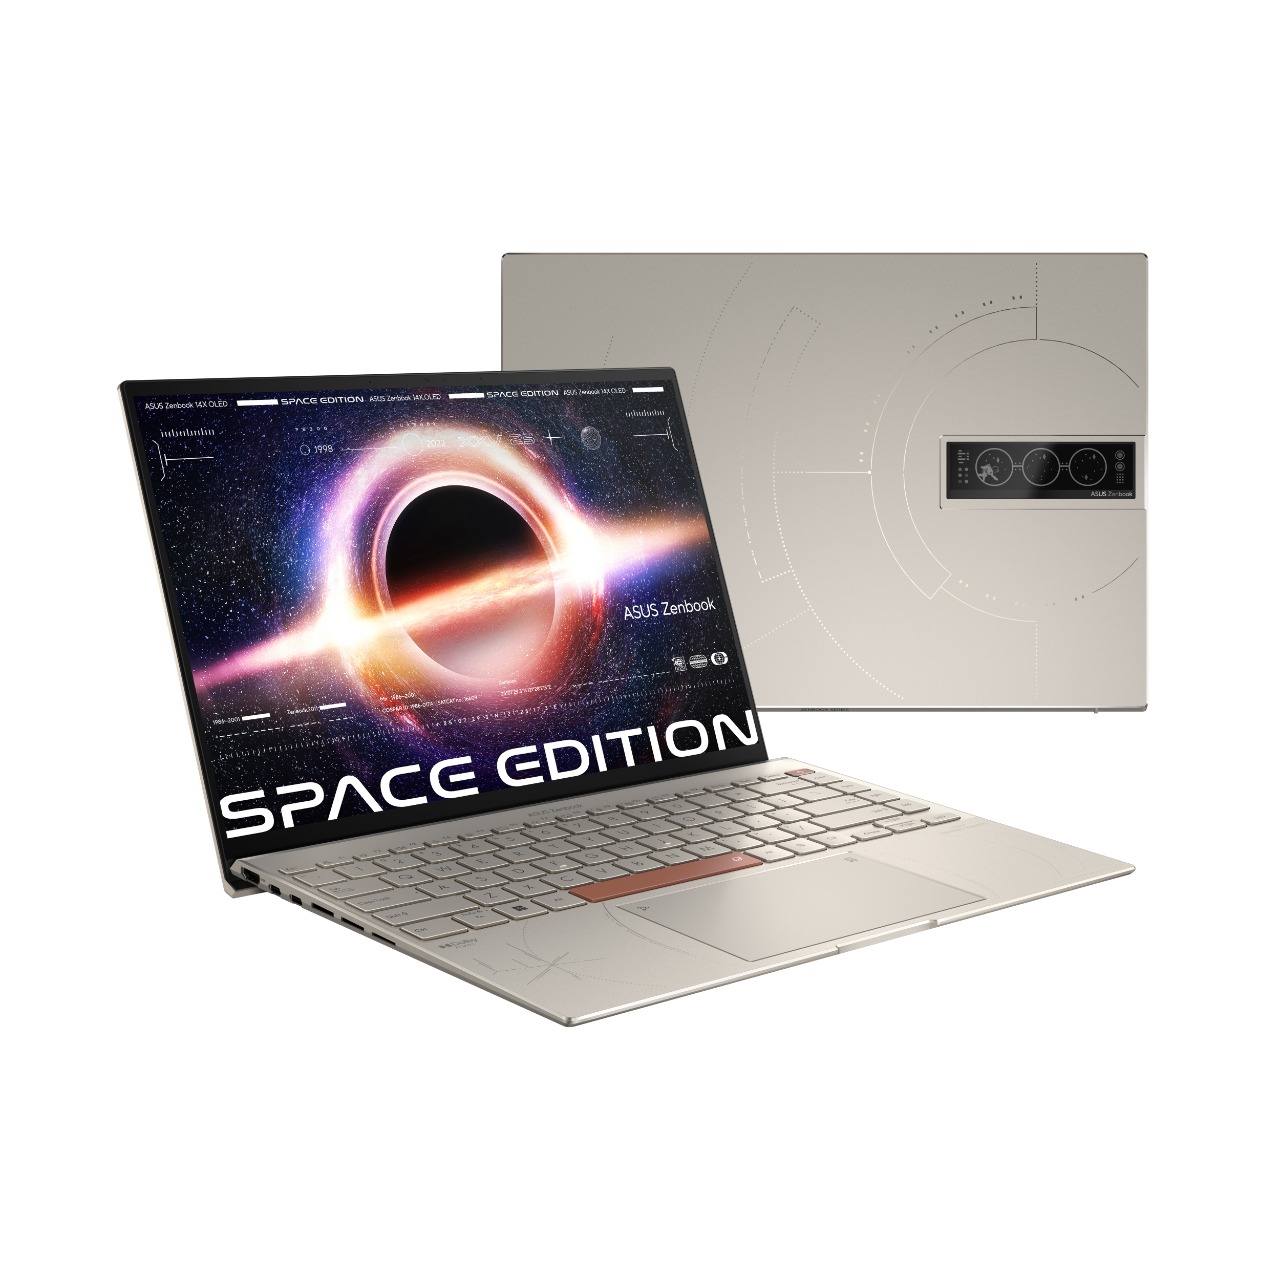 ASUS Zenbook Space Edition, Laptop Bertema Luar Angkasa Resmi Dirilis     